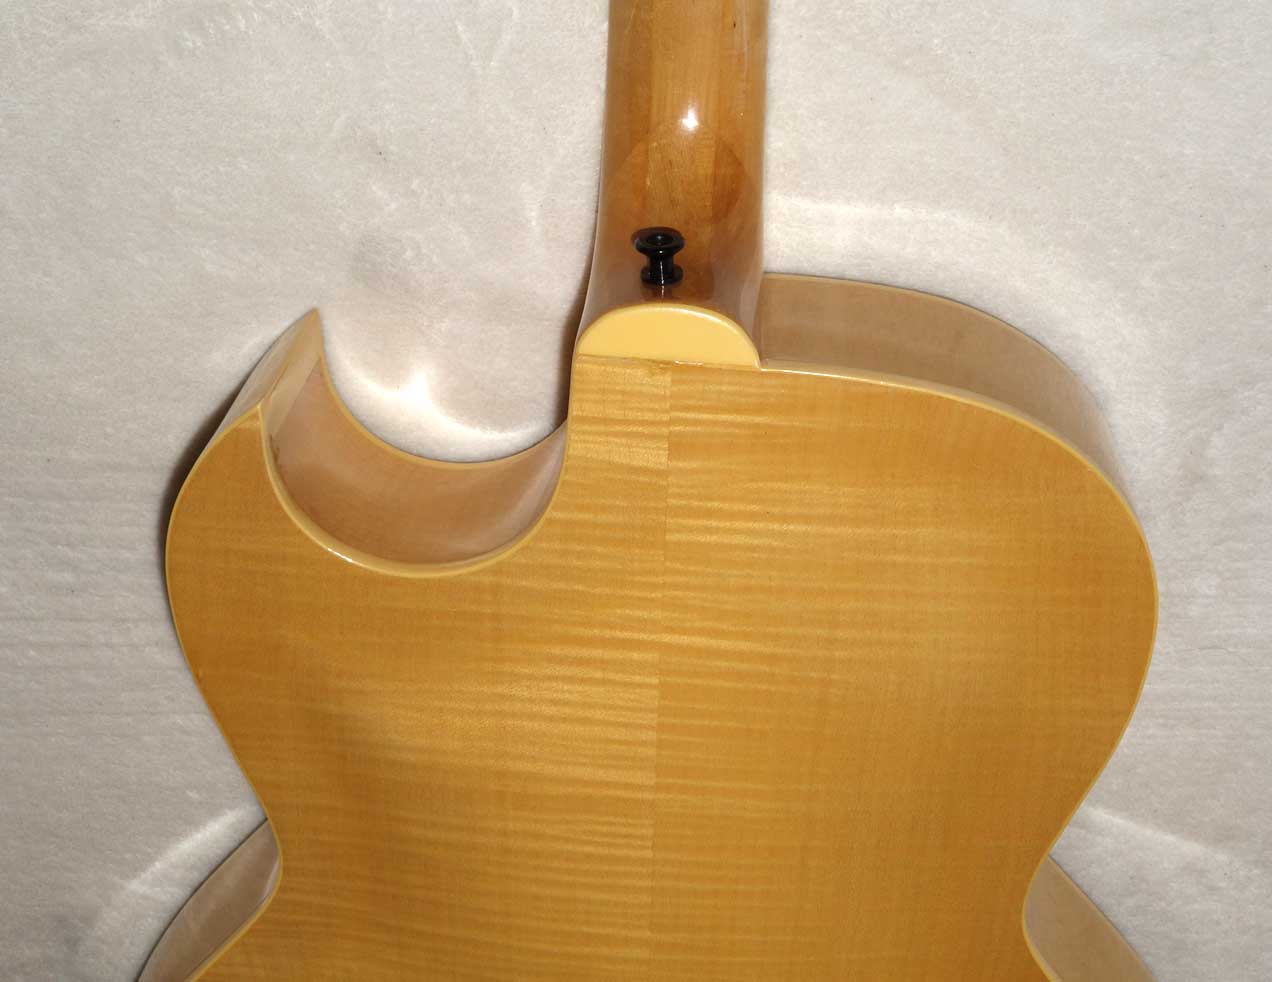 Vintage 1974 Pre-Lawsuit MIJ Bradley / Ibanez 2355M / Gibson ES175 Copy Hollow-Body Guitar Made by Fuji Gen Factory